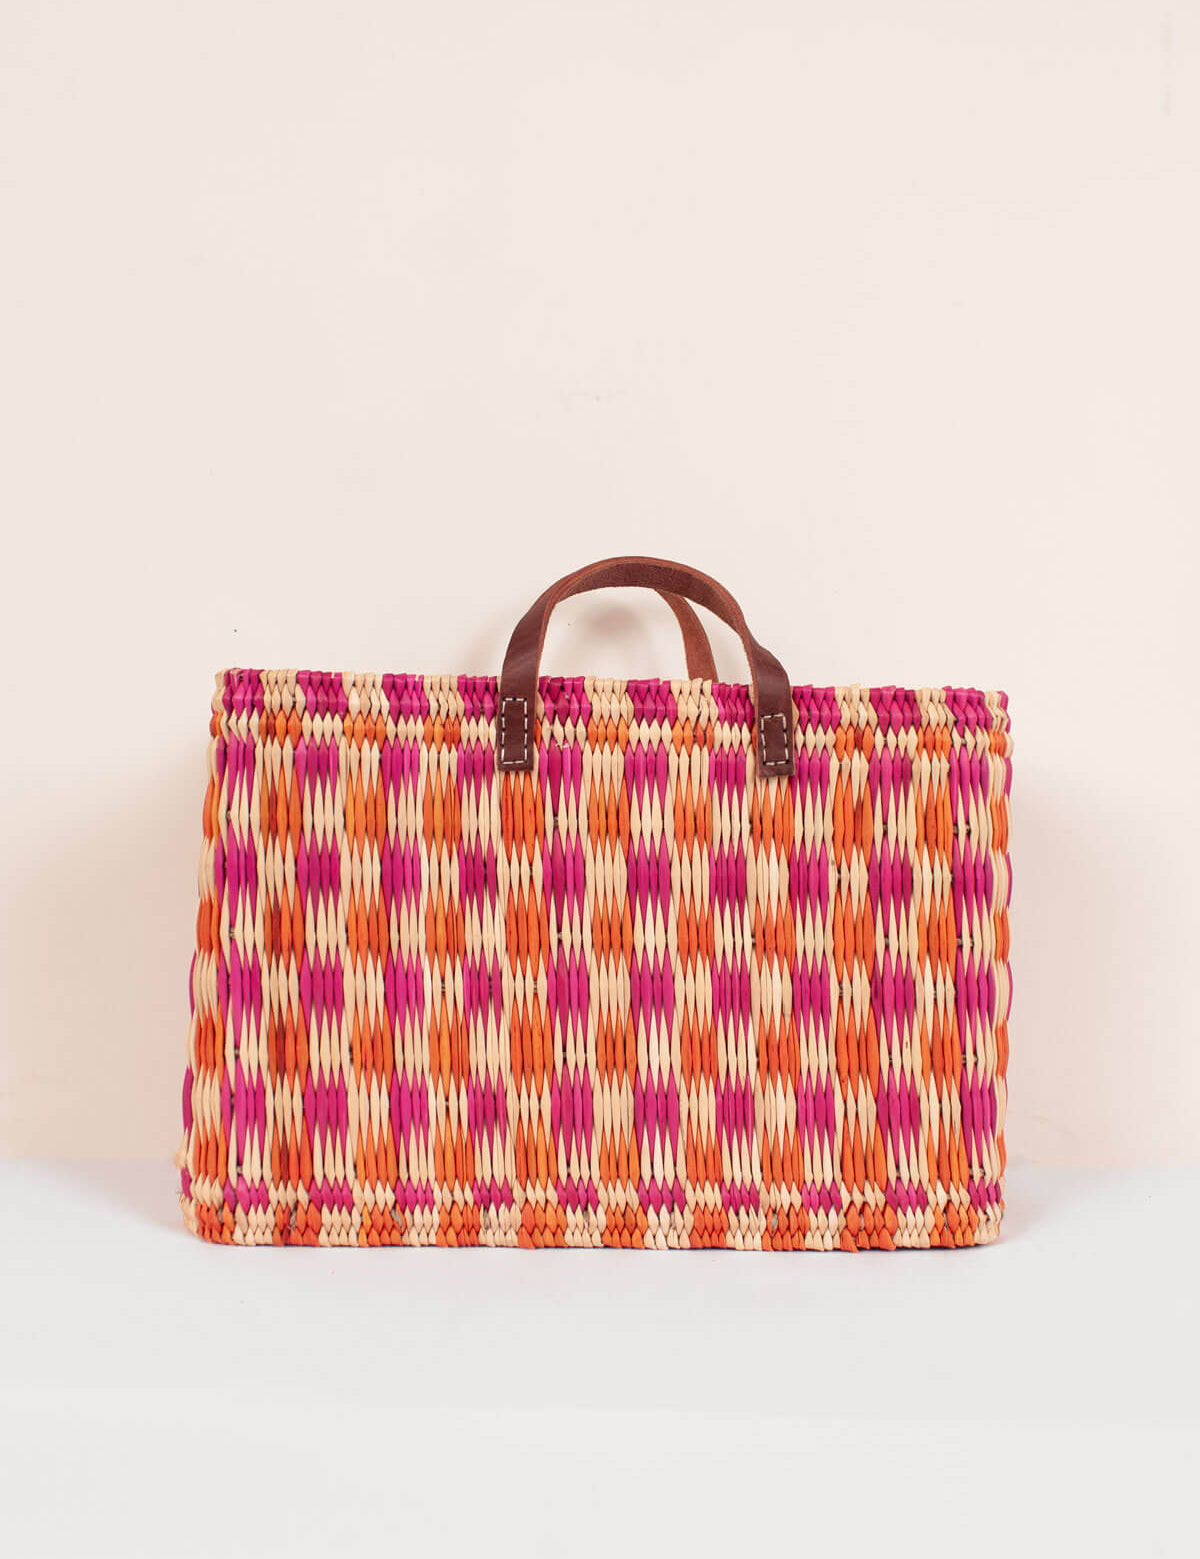 Chequered-Reed-Basket-Pink-Orange--Large-BohemiaDesign_07416263-e8a8-4f8d-aea1-ff1d6bbc1a00.jpg